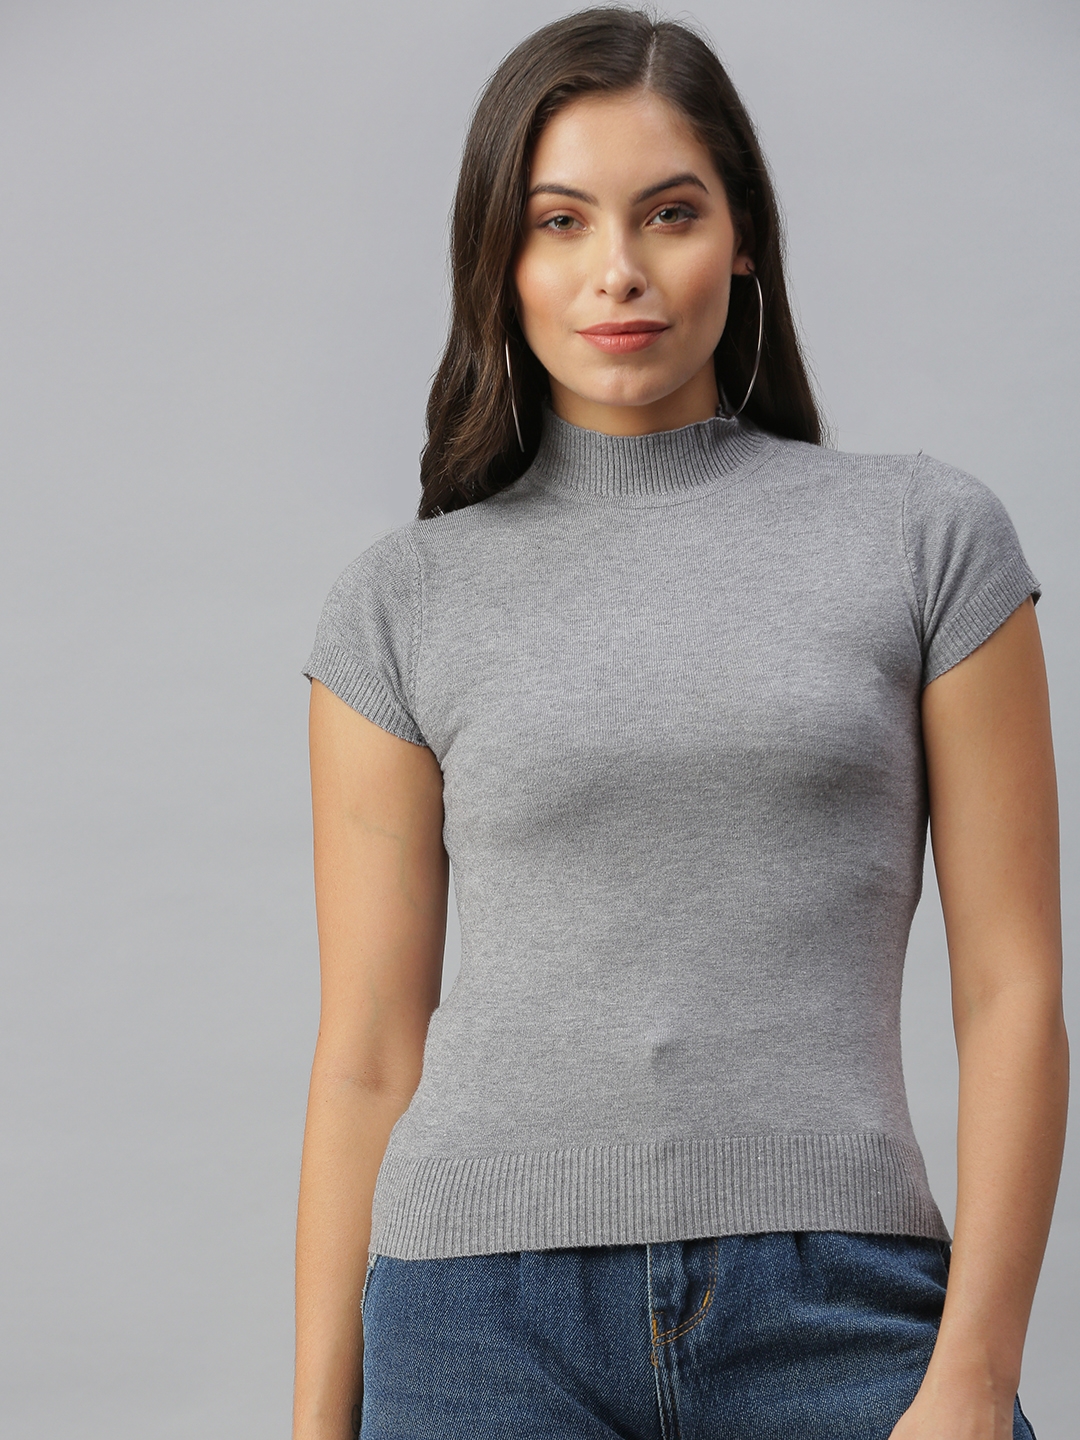 Women's Grey Cotton Blend Solid Tops